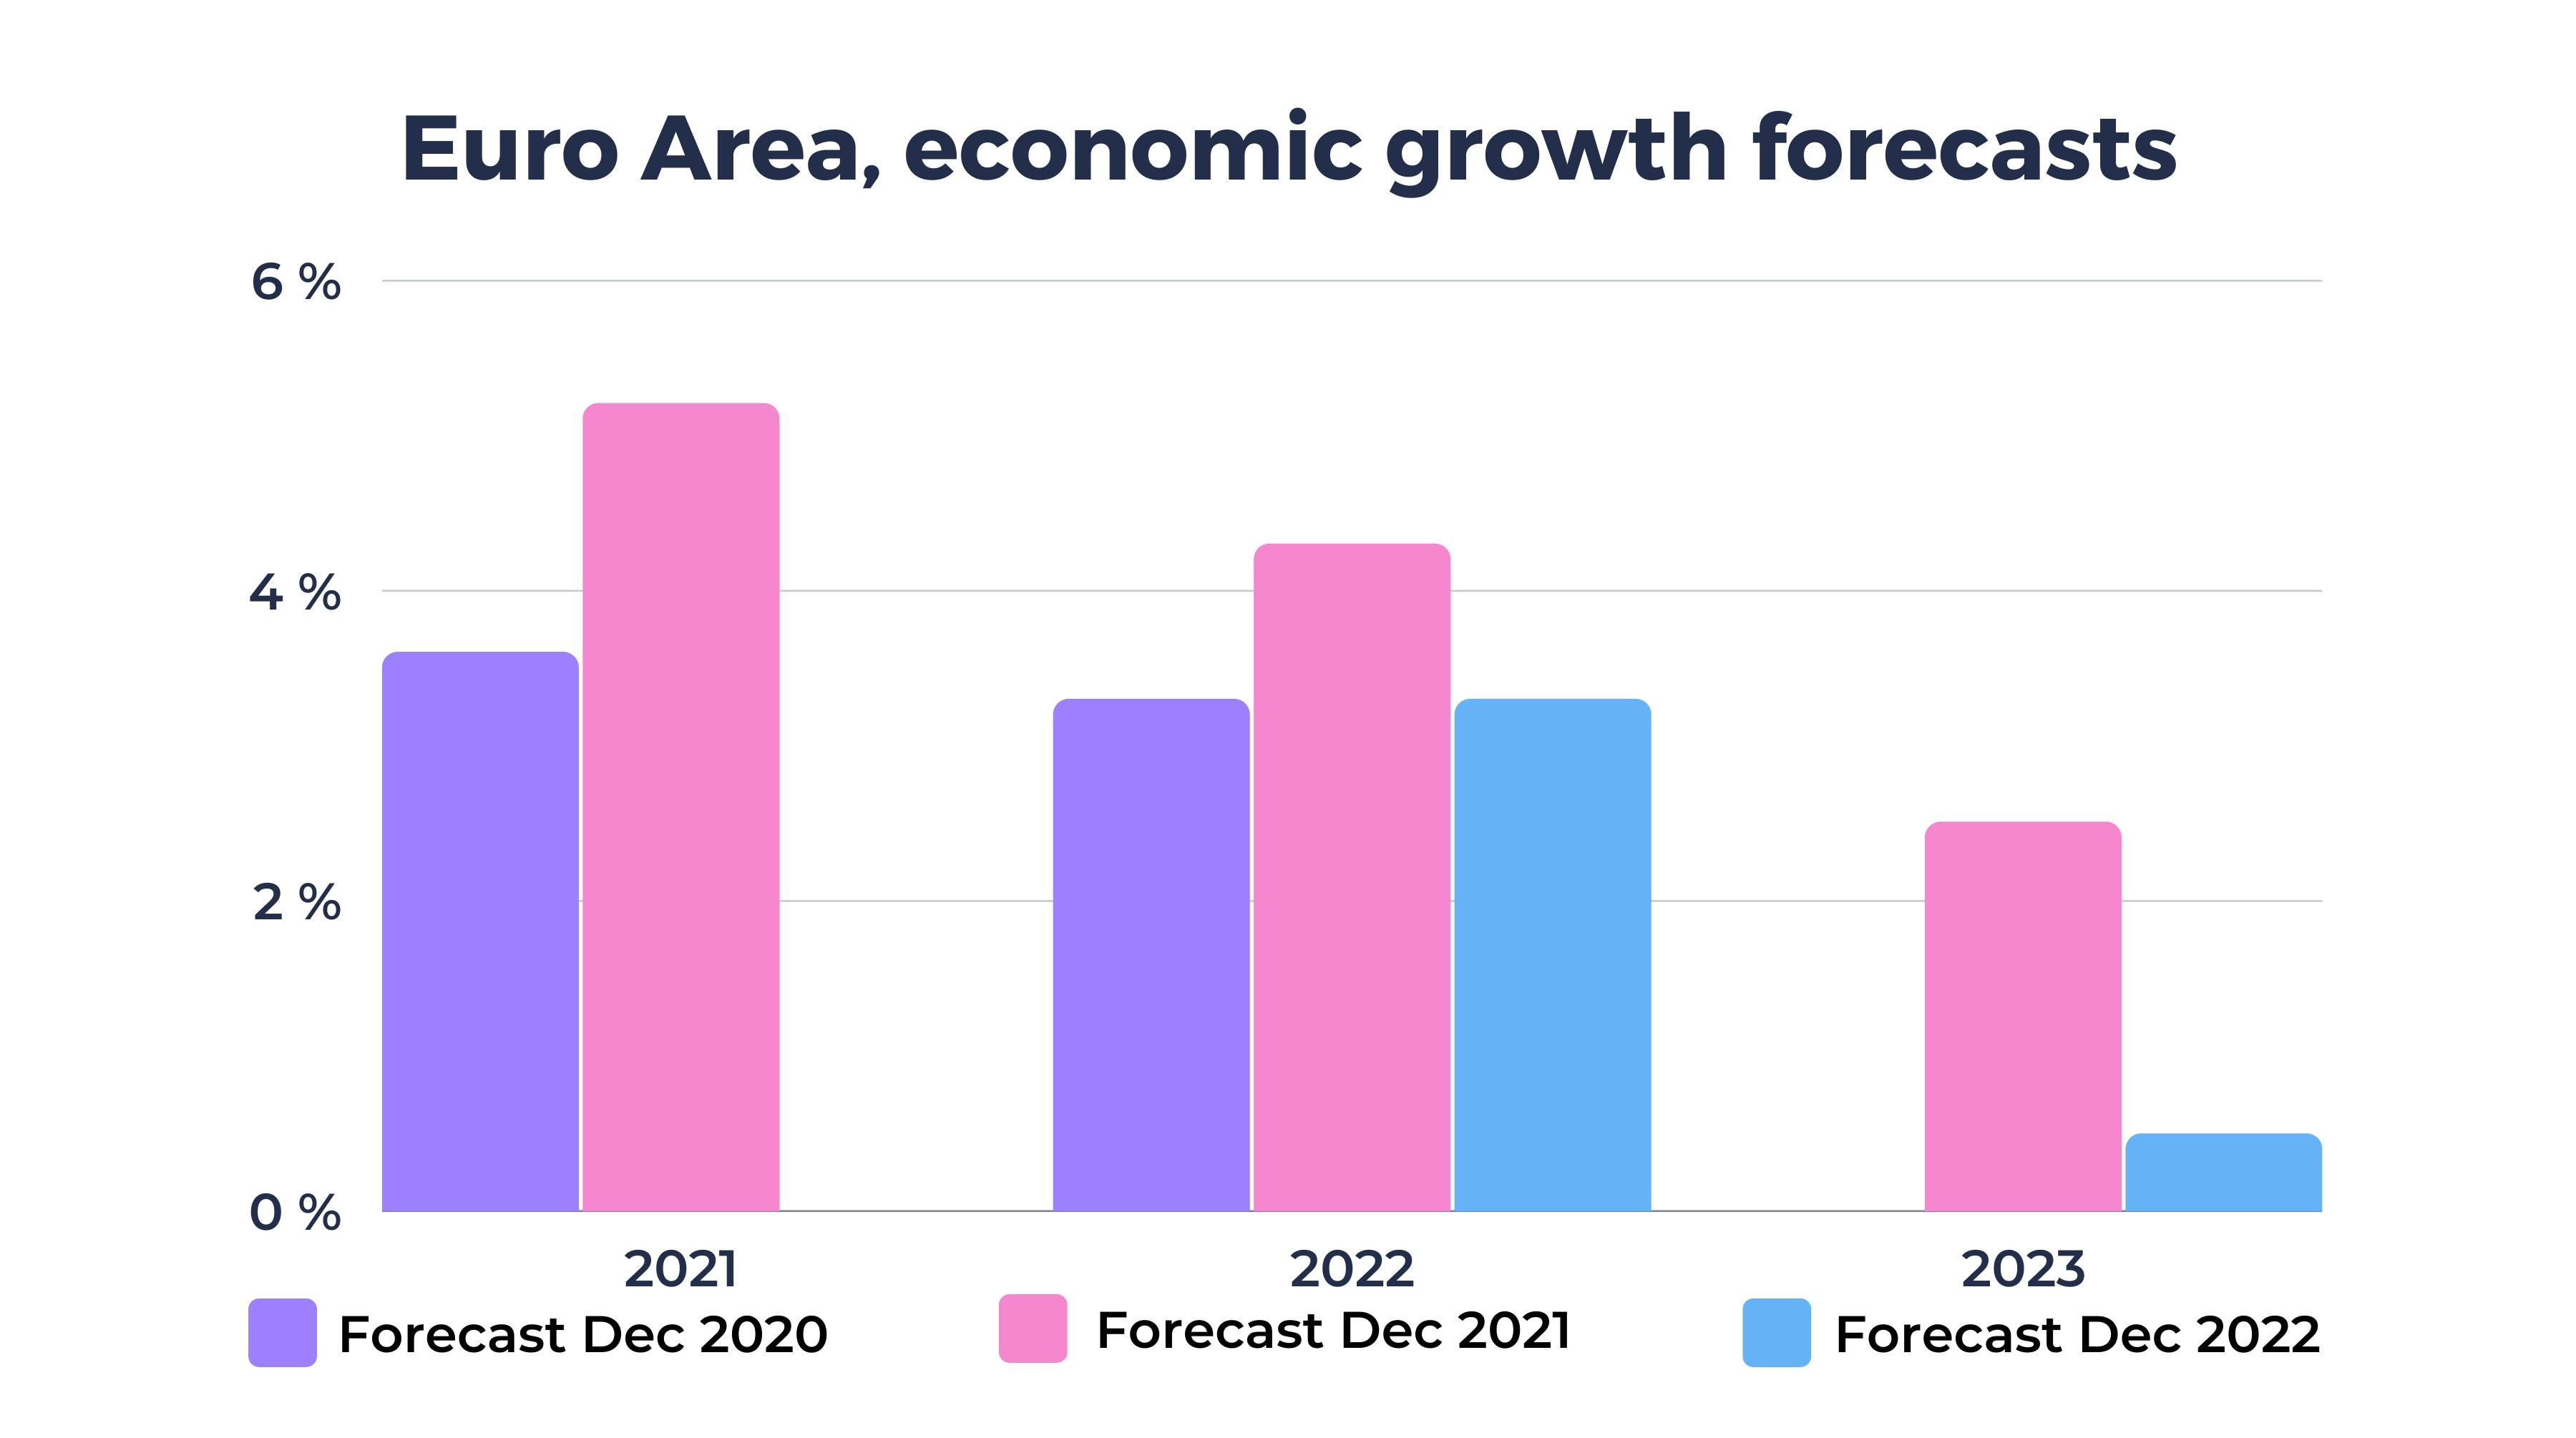 Euro Area, economic growth forecast